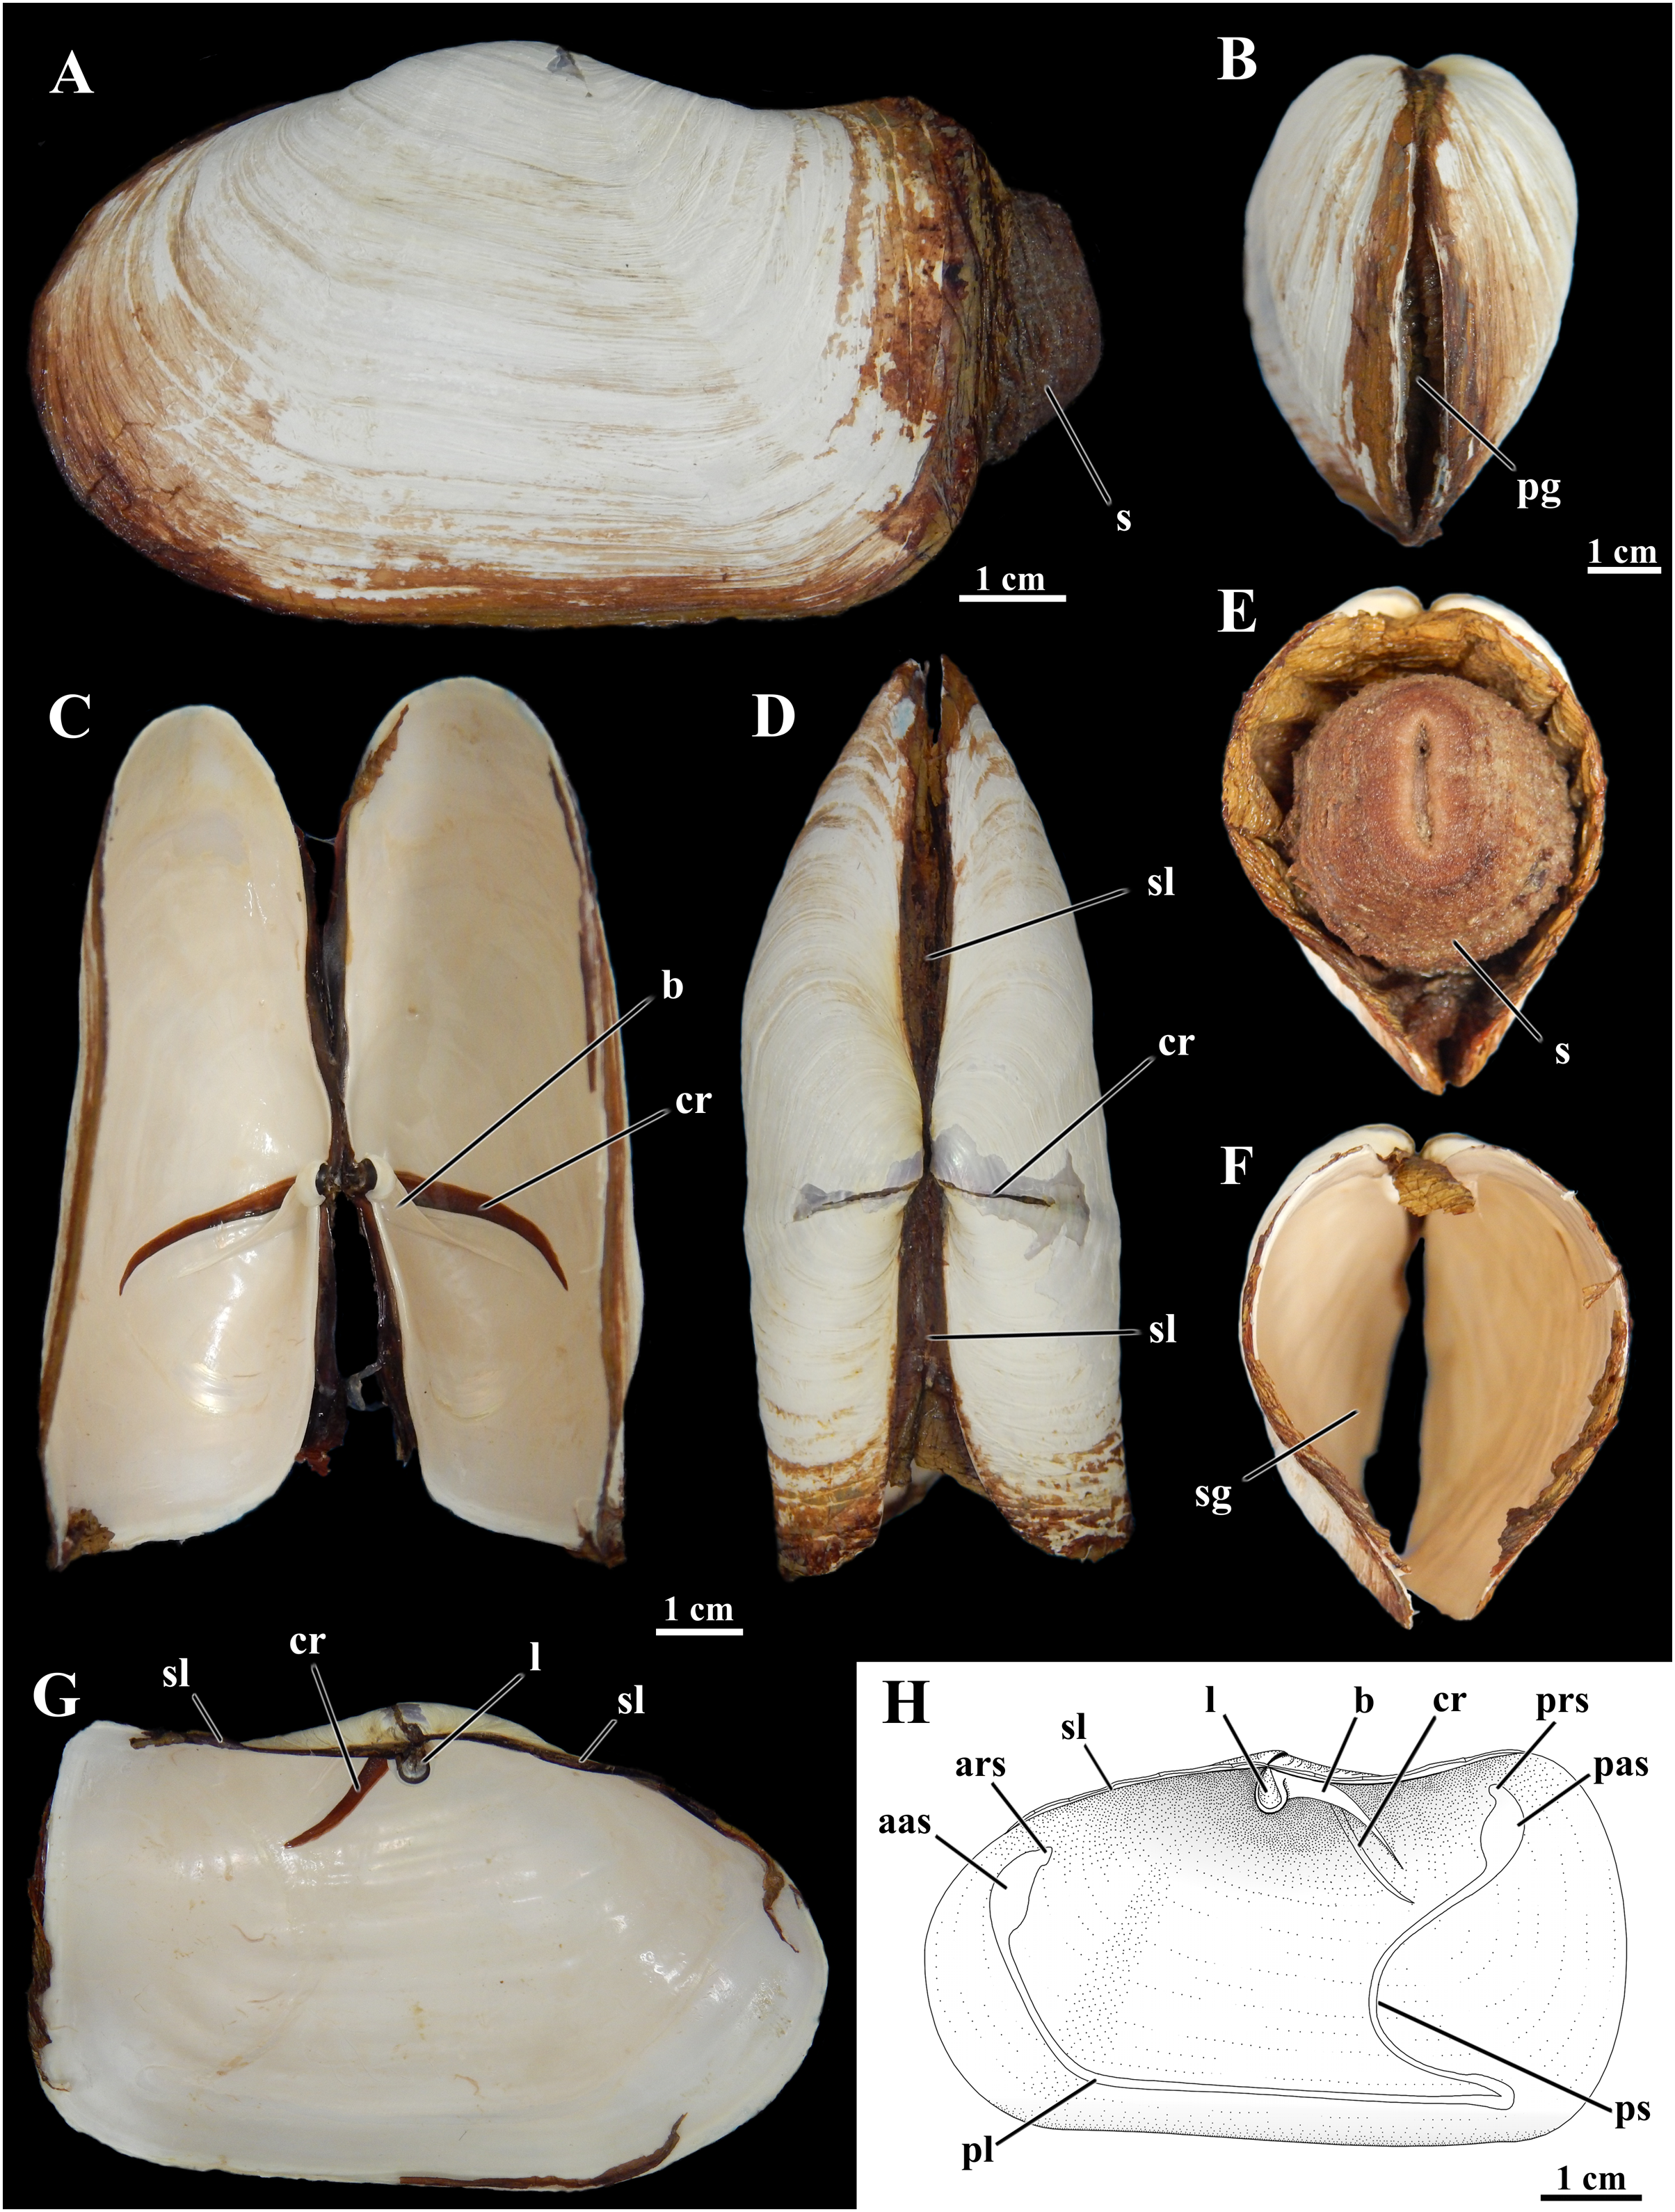 Anatomy and behavior of Laternula elliptica, a keystone species of